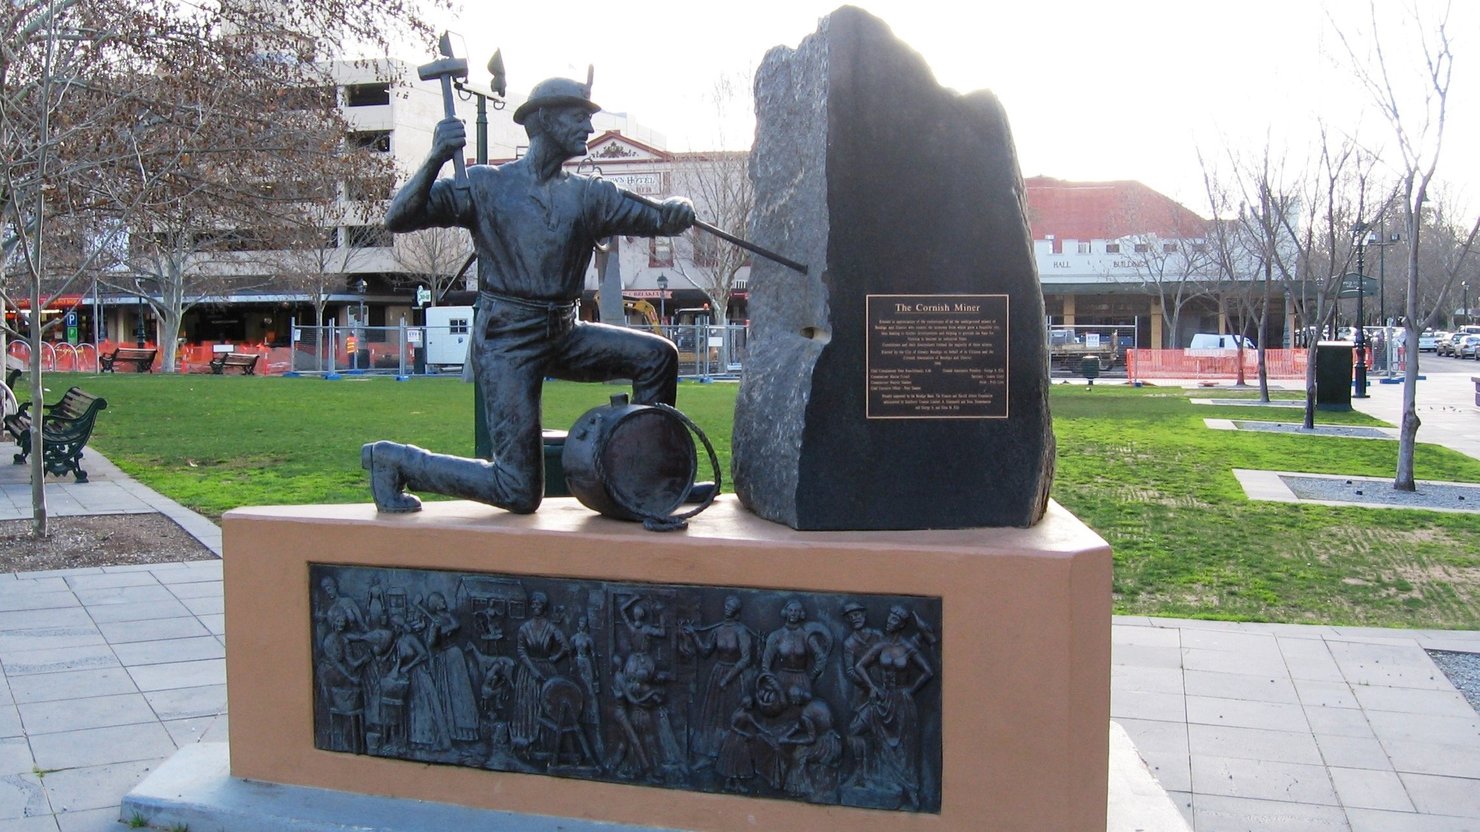 Cornish Miner statue in Bendigo